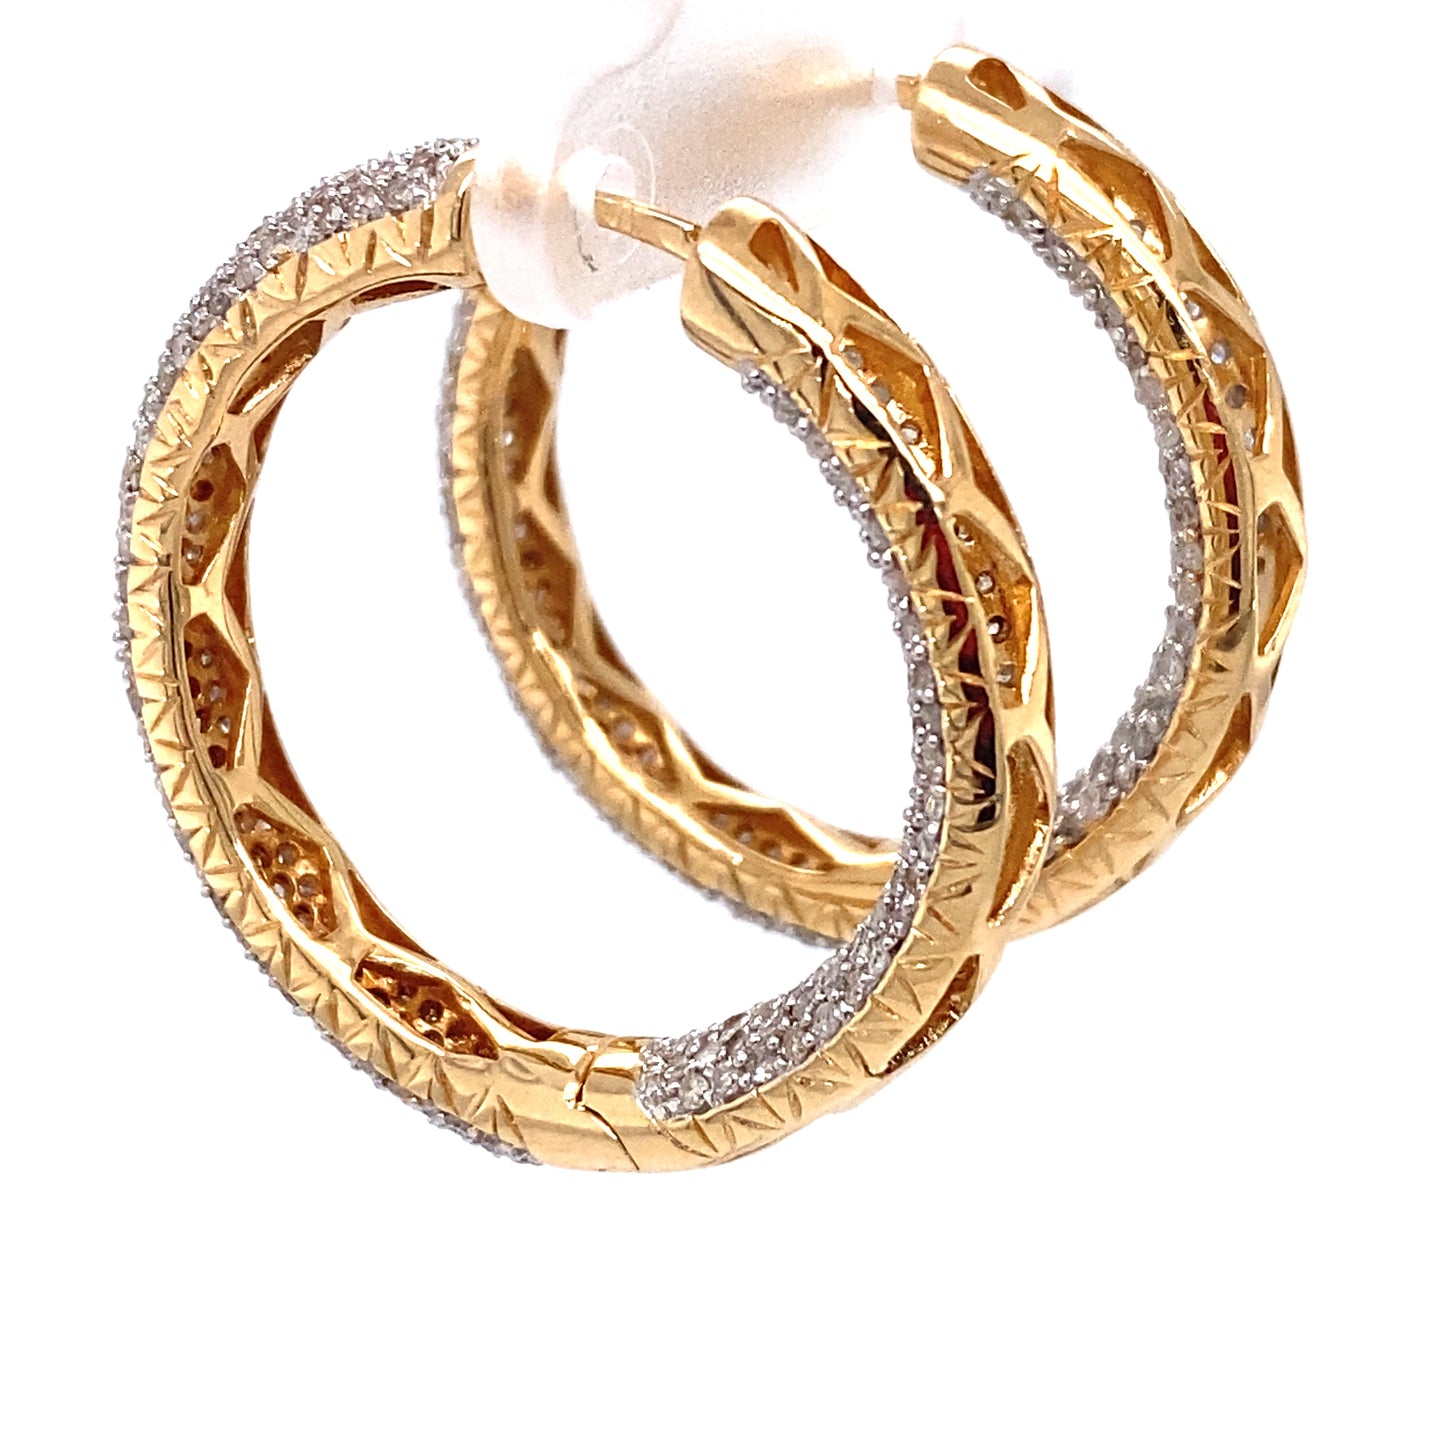 Circa 1990s 2.5 Carat Diamond Inside-Out Hoop Earrings in 14K Two Tone Gold